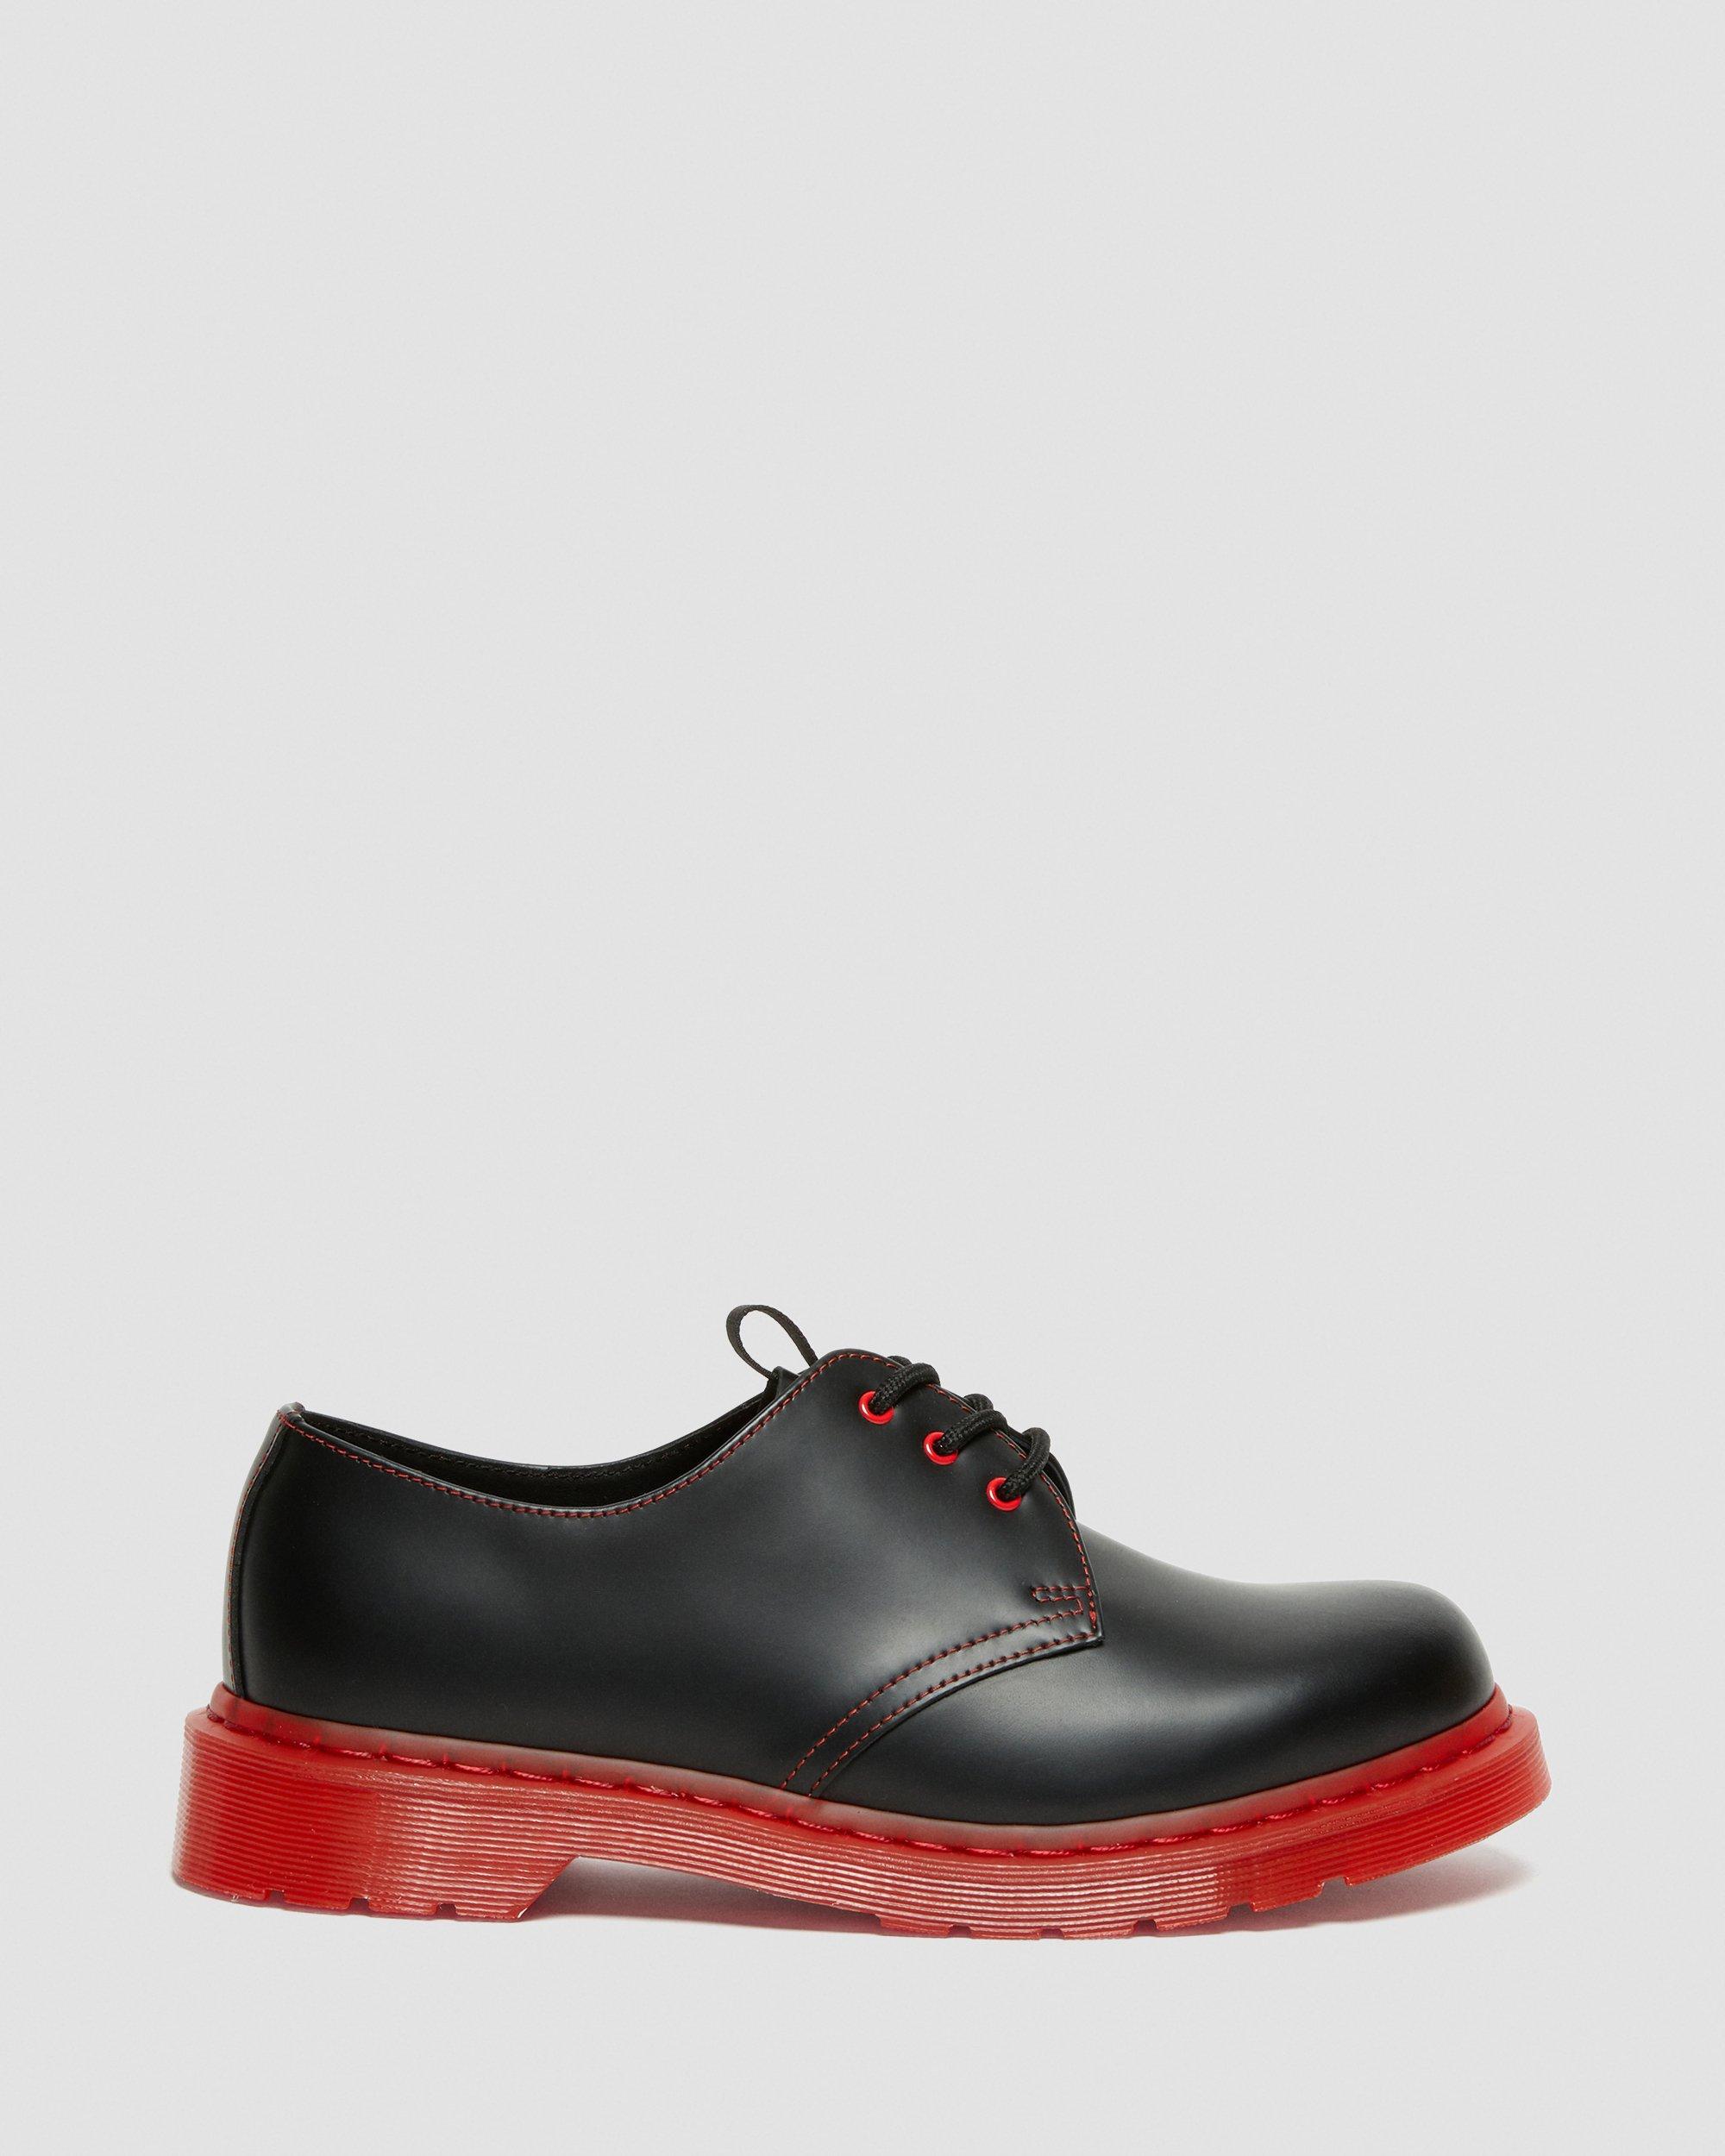 DR MARTENS 1461 CLOT Leather Oxford Shoes